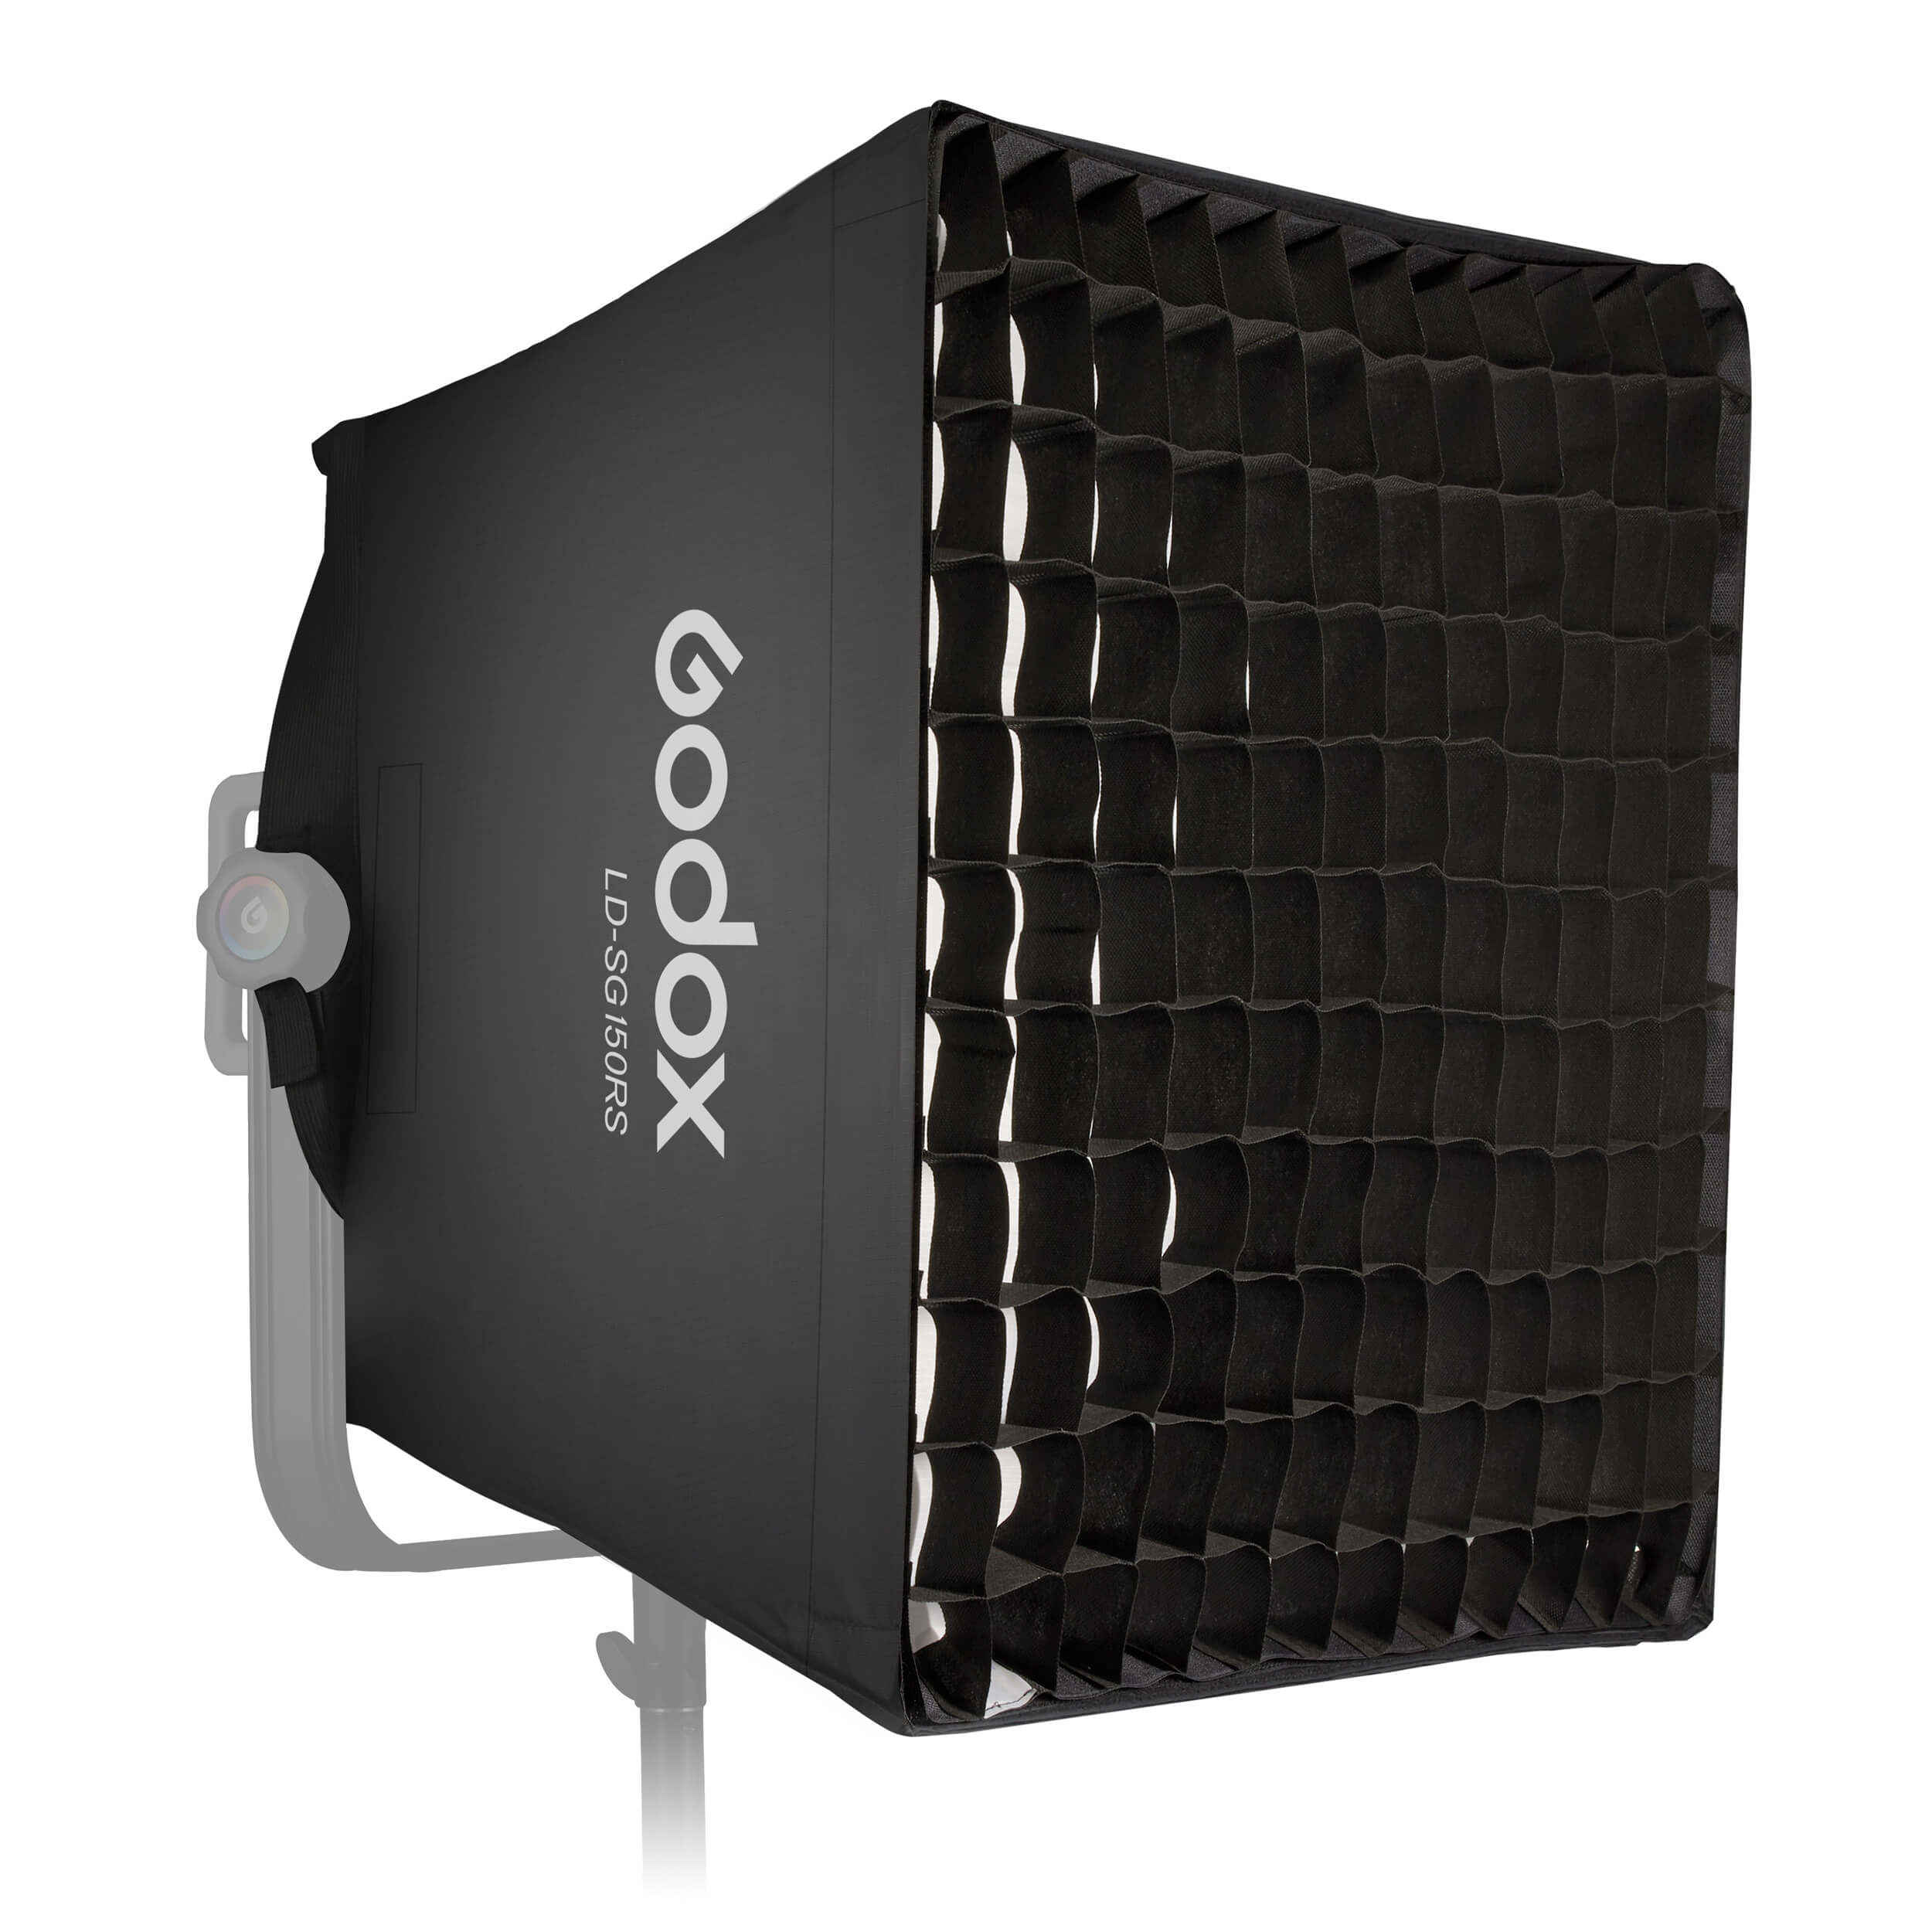 Godox Rectangular Softbox for FH50BI/FH50R Flexible Light FS50